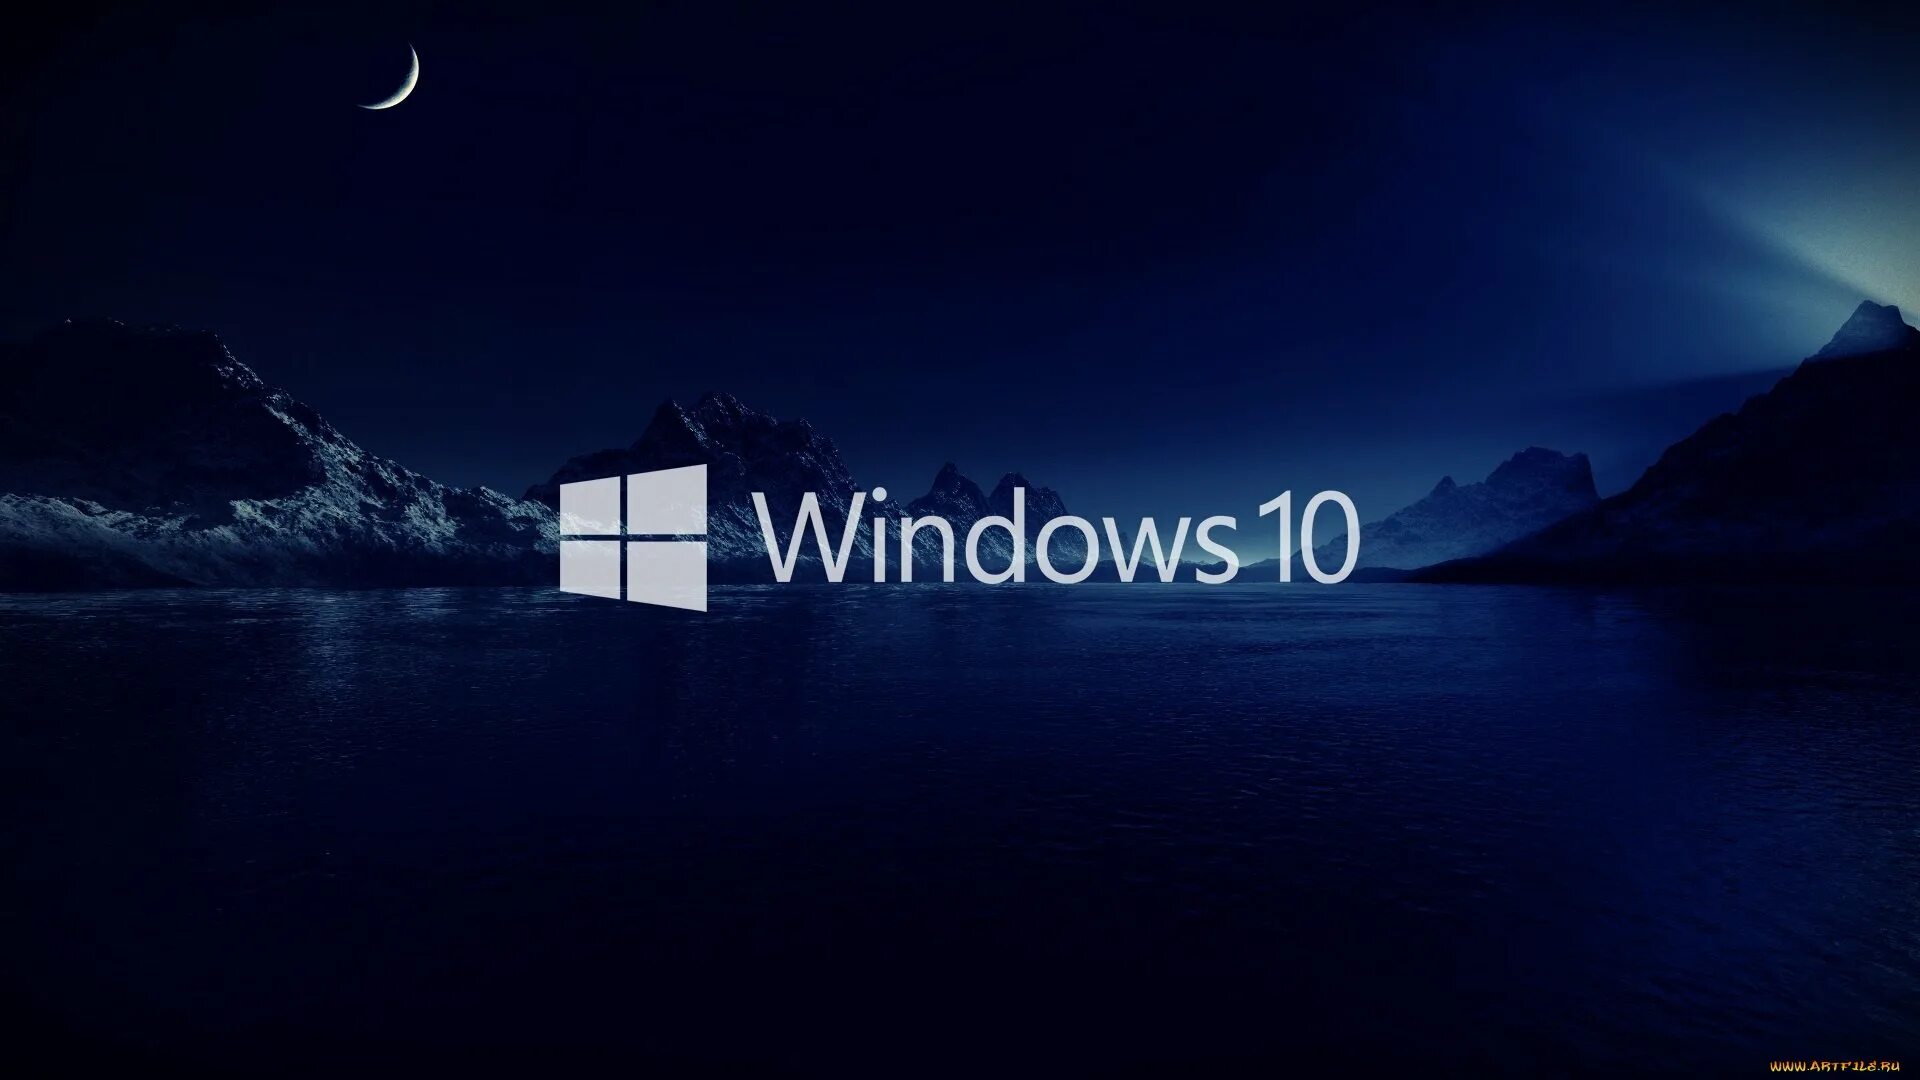 Windows 10 1024. Виндокюус 10. Заставка виндовс 10. Картинки Windows 10. Фоновое изображение Windows 10.